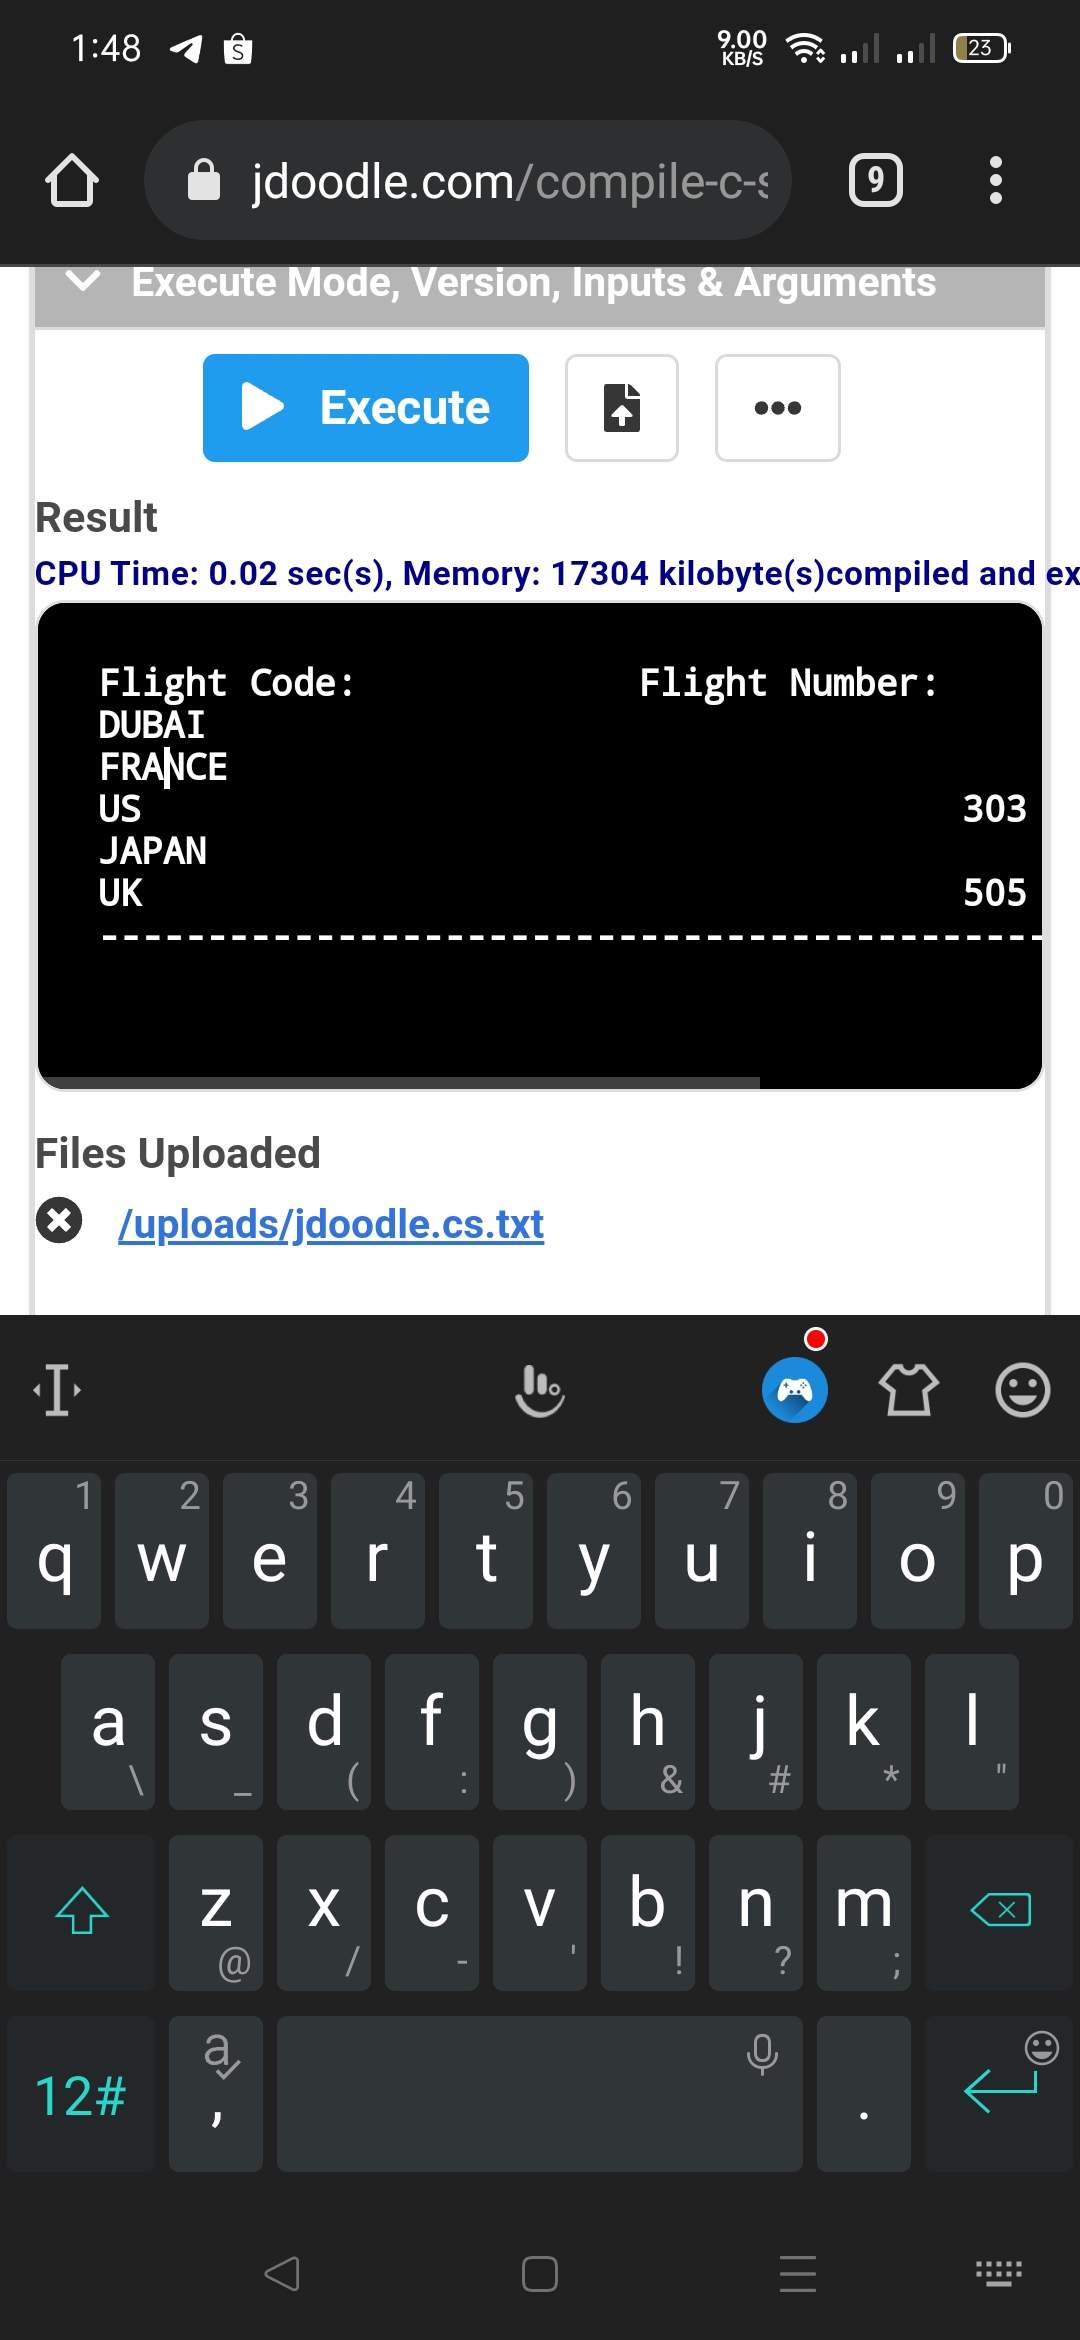 1:48
9.00
KB/S
23
jdoodle.com/compile-c-s
9
Execute Mode, Version, Inputs & Arguments
Execute
Result
CPU Time: 0.02 sec(s), Memory: 17304 kilobyte(s)compiled and ex
Flight Code:
DUBAI
Flight Number:
FRANCE
US
303
JAPAN
UK
505
Files Uploaded
* /uploads/jdoodle.cs.txt
1
4
5
7
8
9.
q w e
rtyu iop
d fgh jkl
(
S
&
Z X c vbn m
!
?
12#
%23
LO
